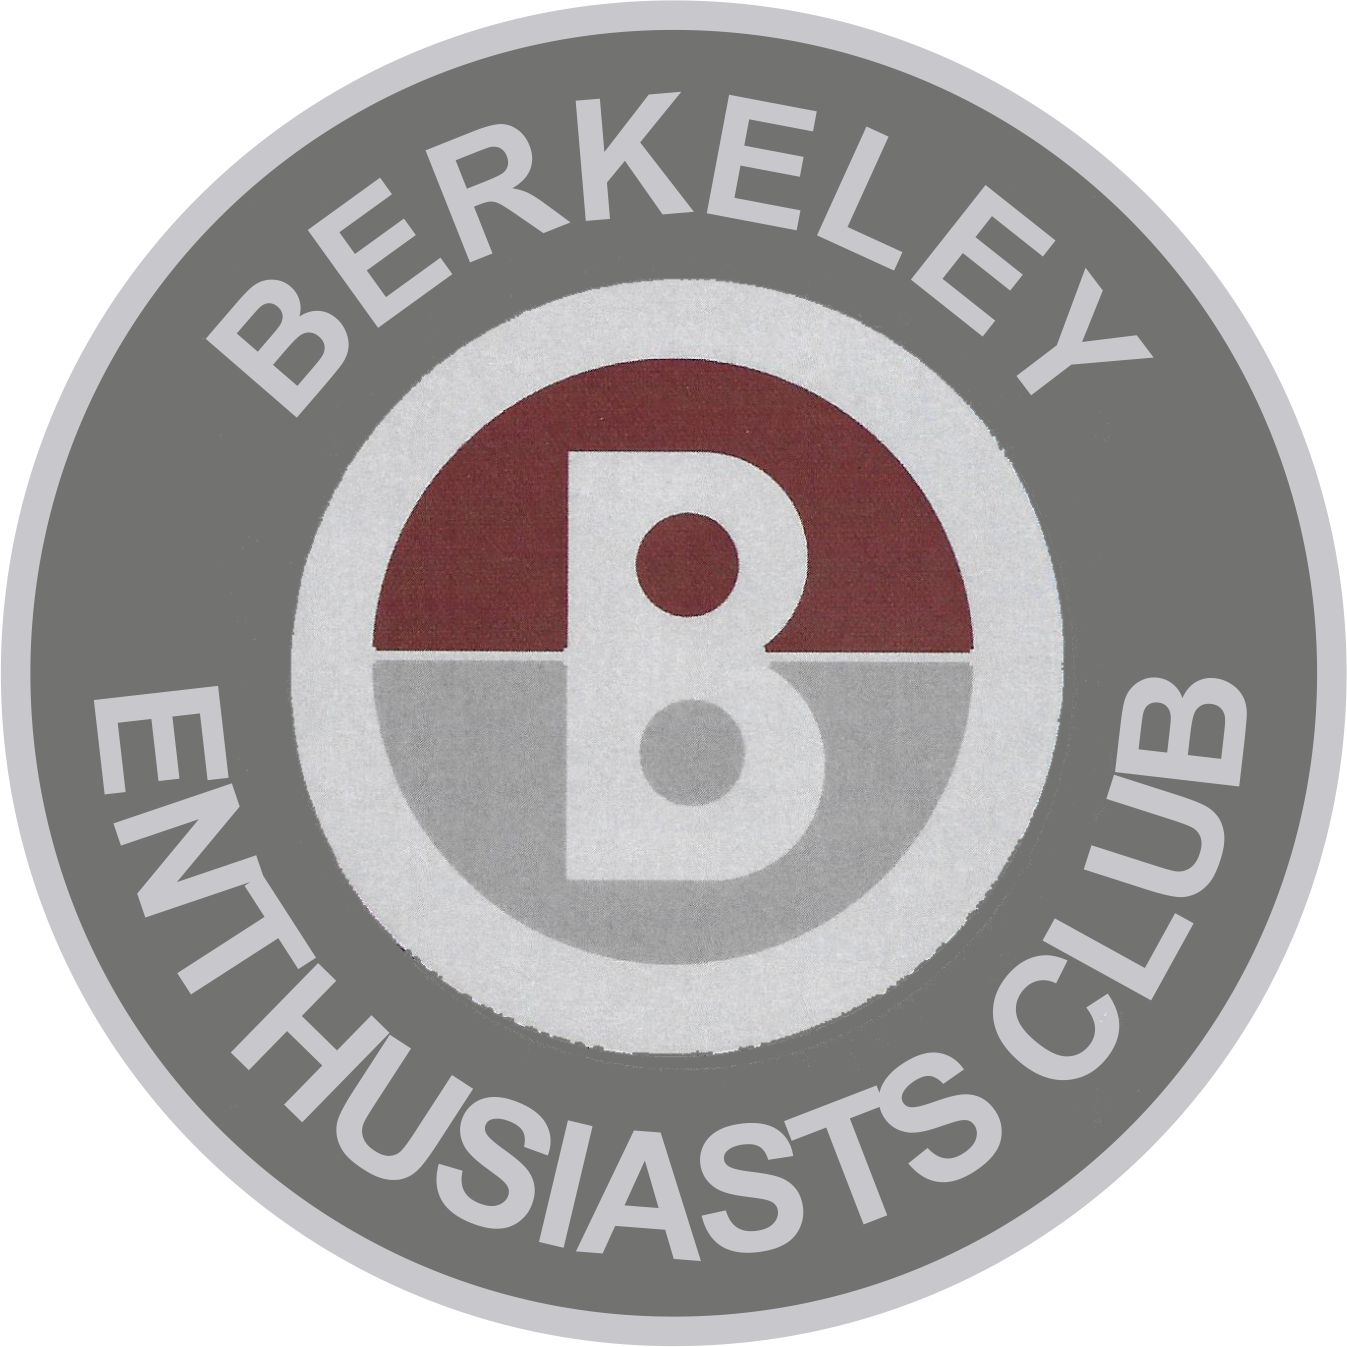 Berkeley Enthusiasts Cloth Badge